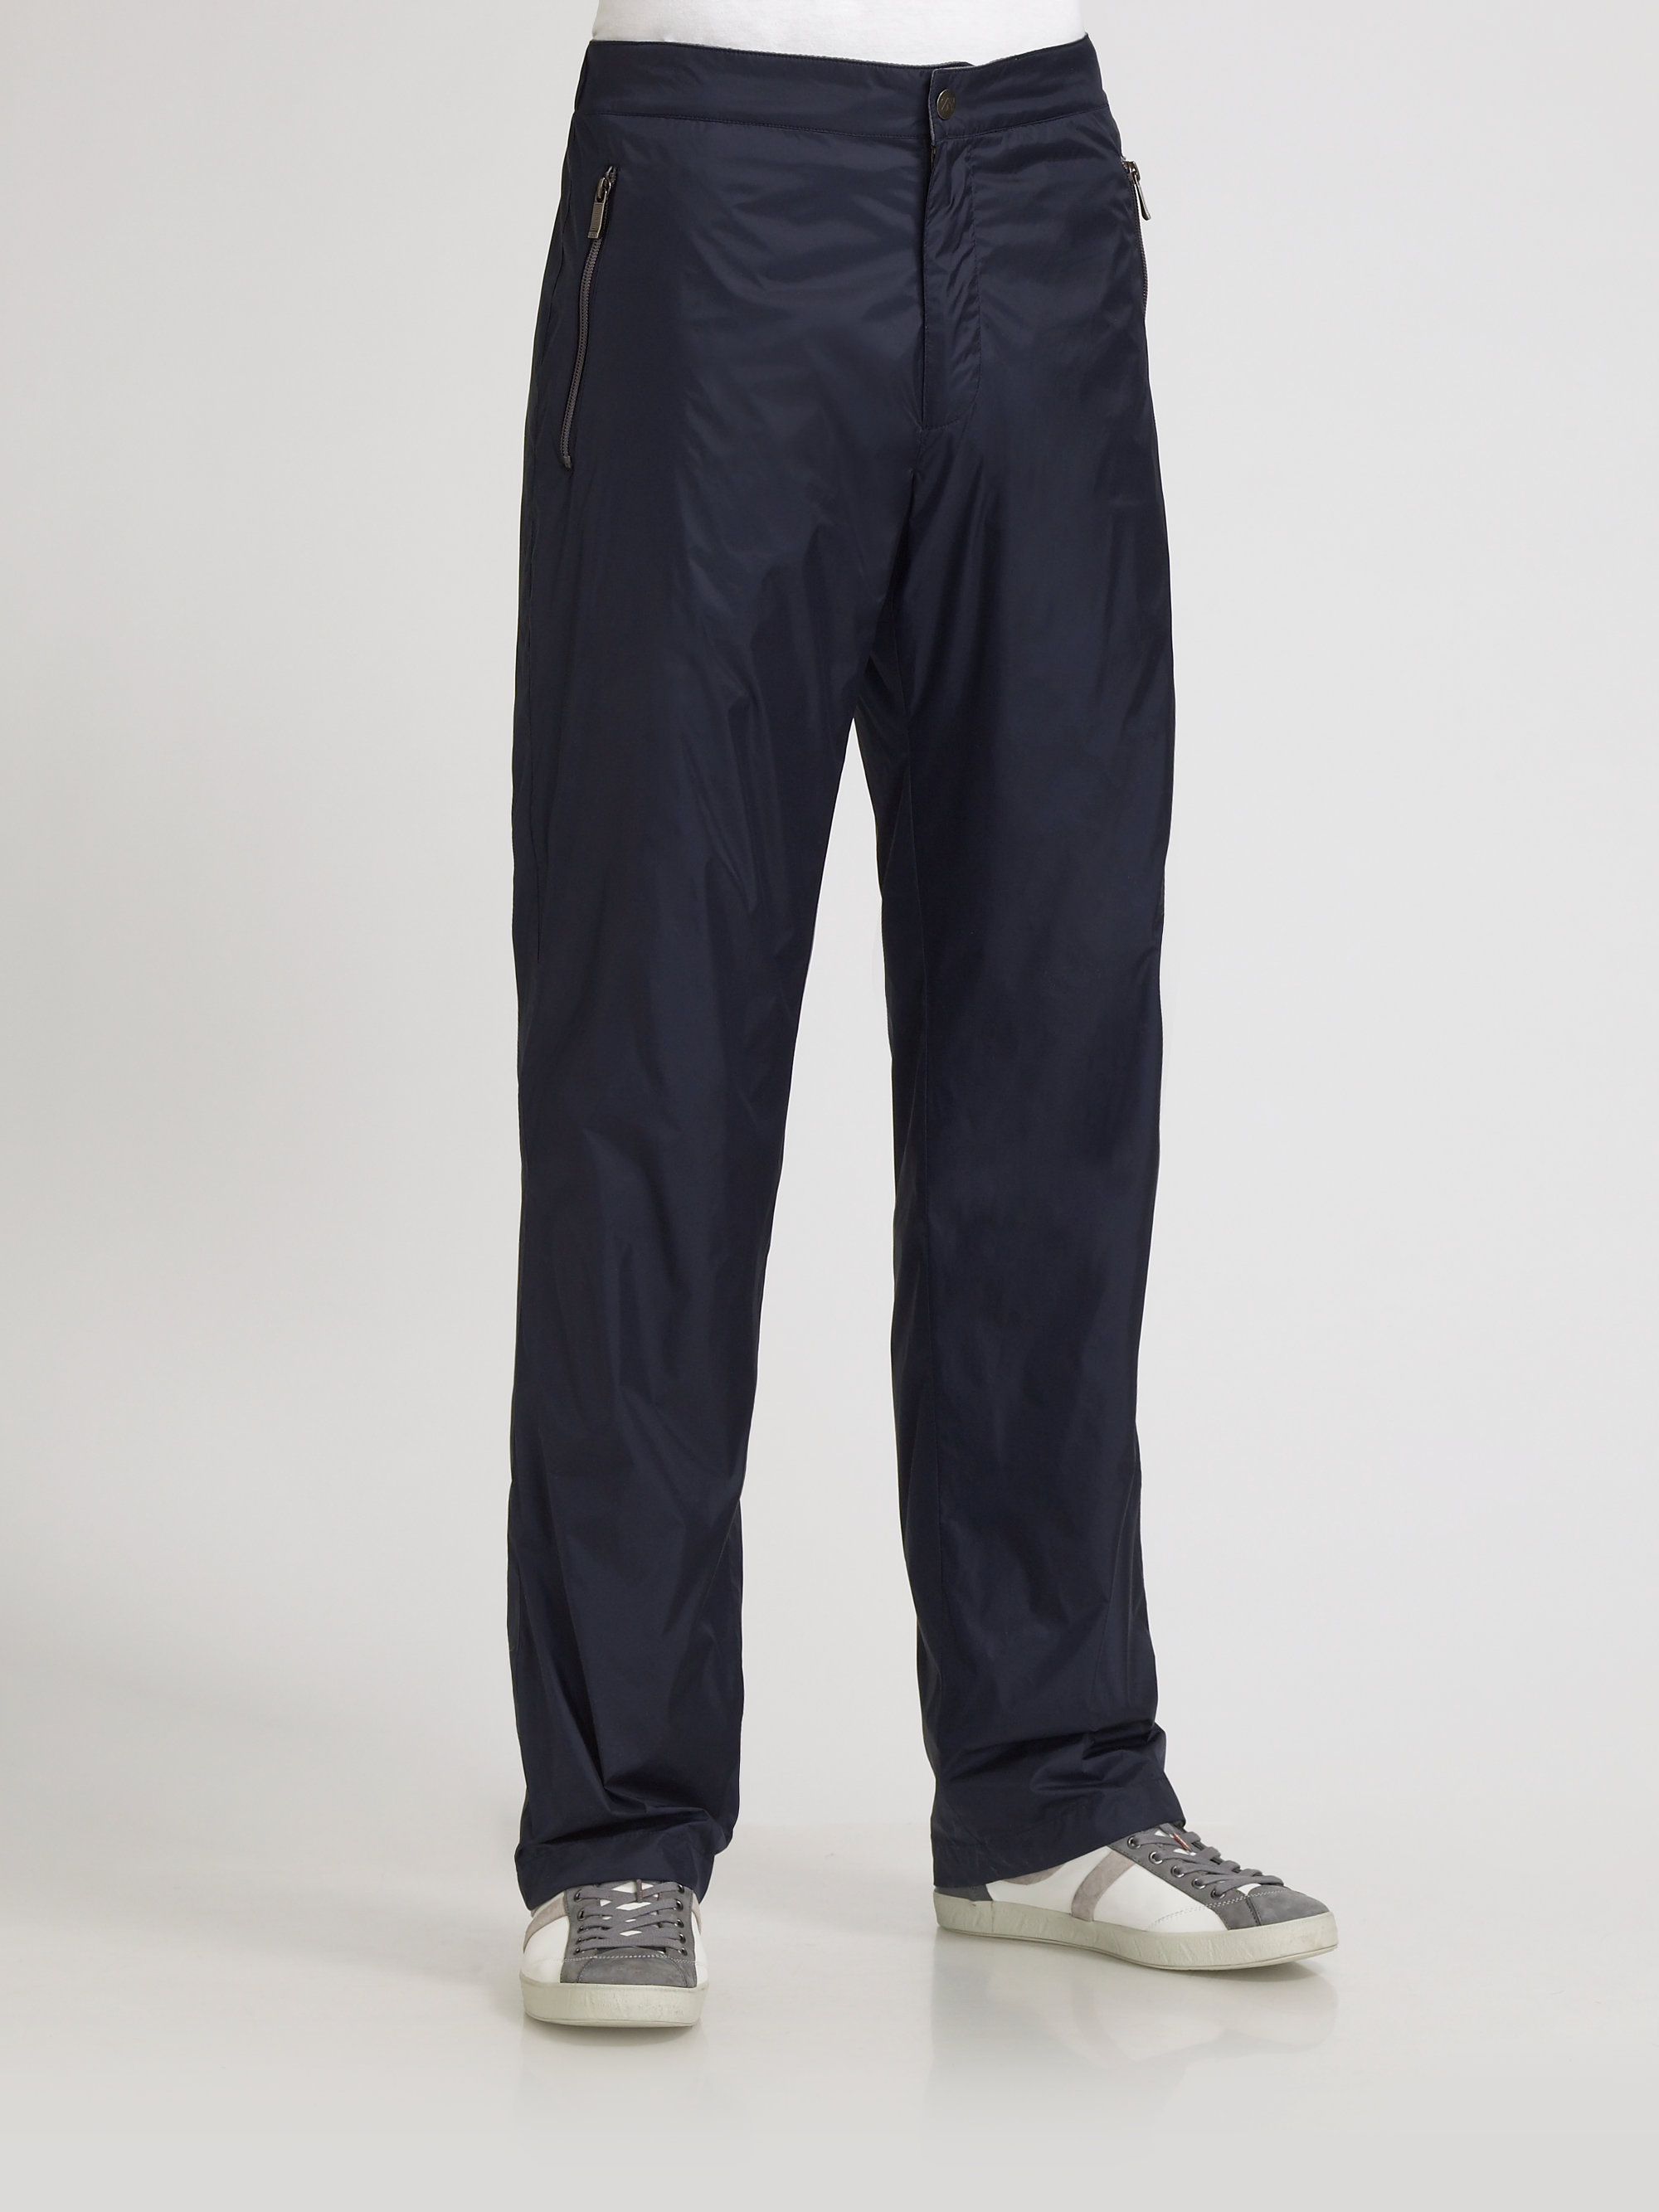 Zegna Sport Track Pants in Navy (Blue) for Men - Lyst